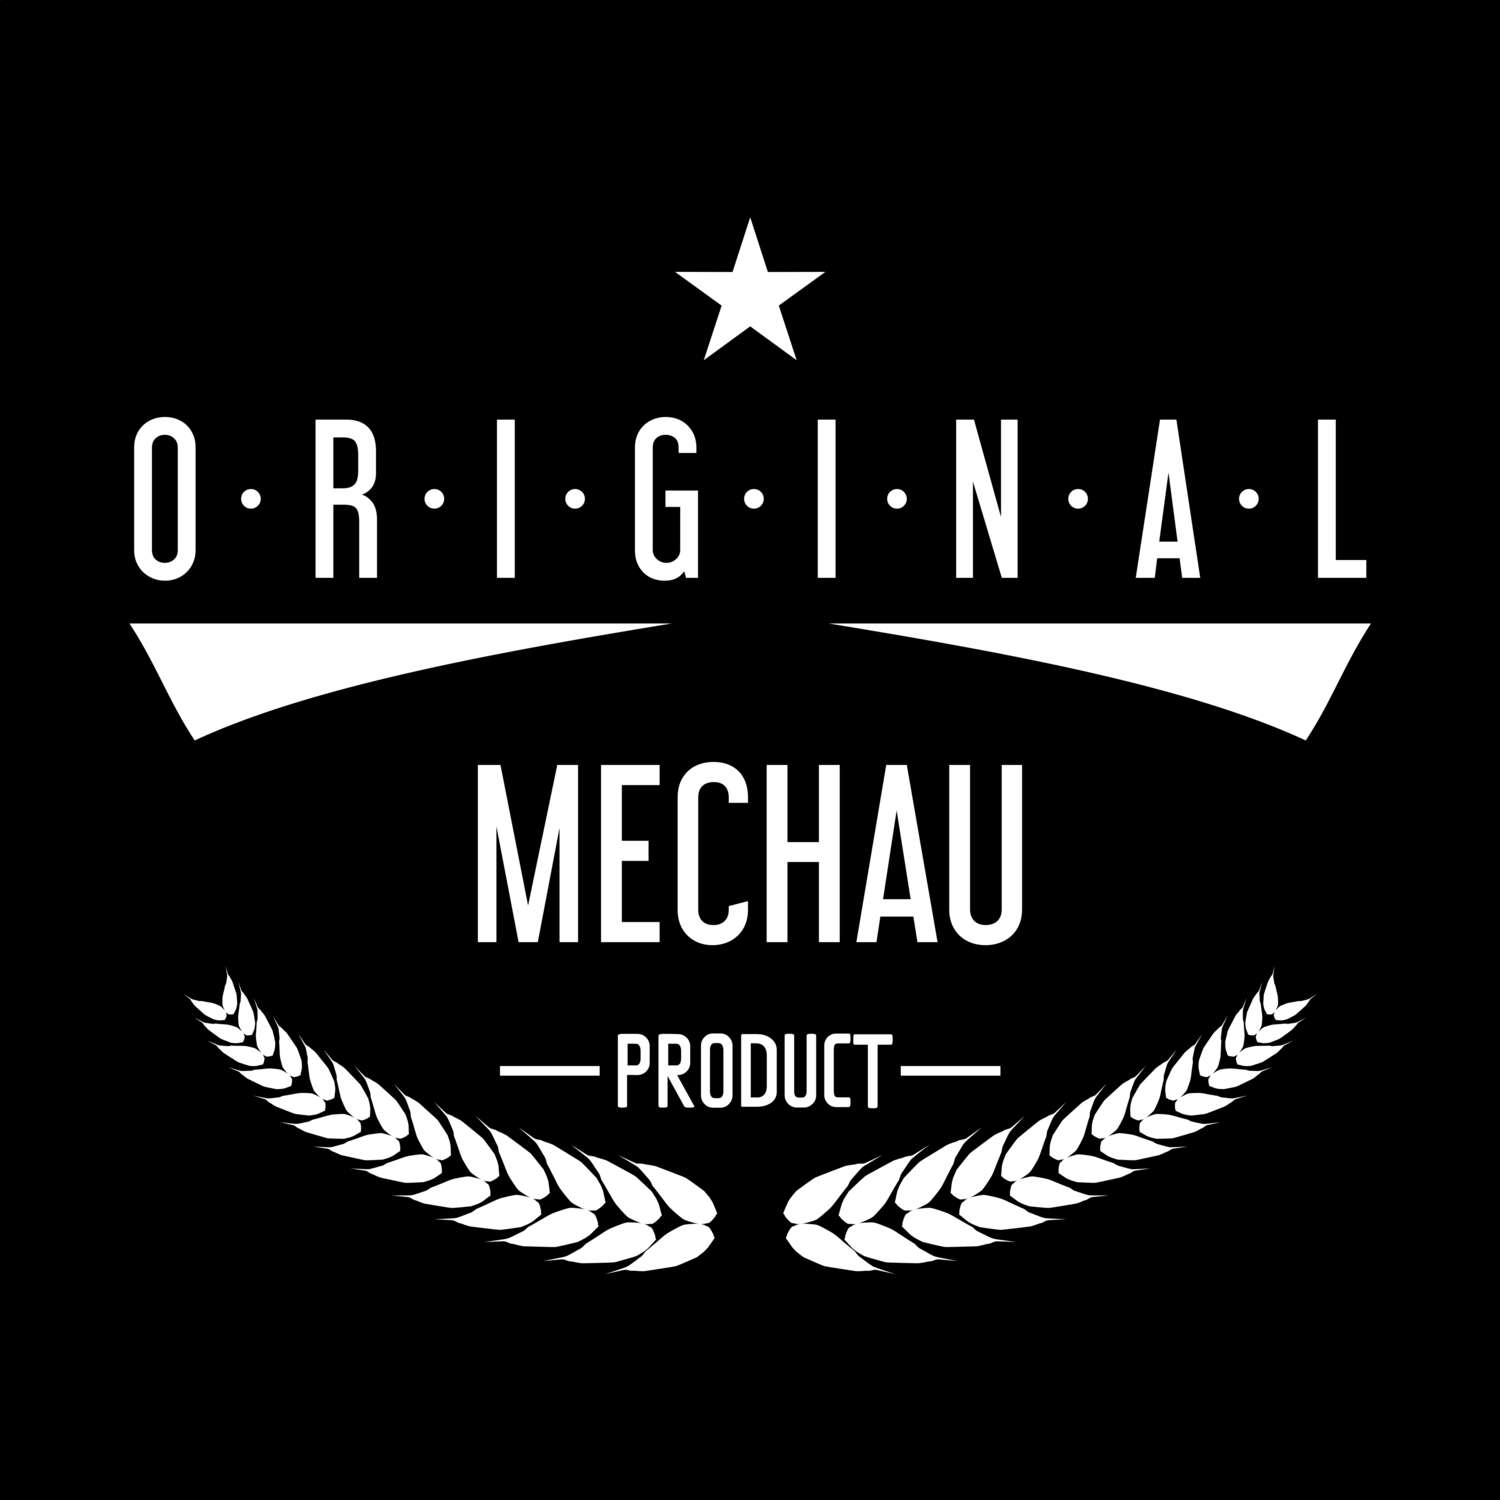 Mechau T-Shirt »Original Product«